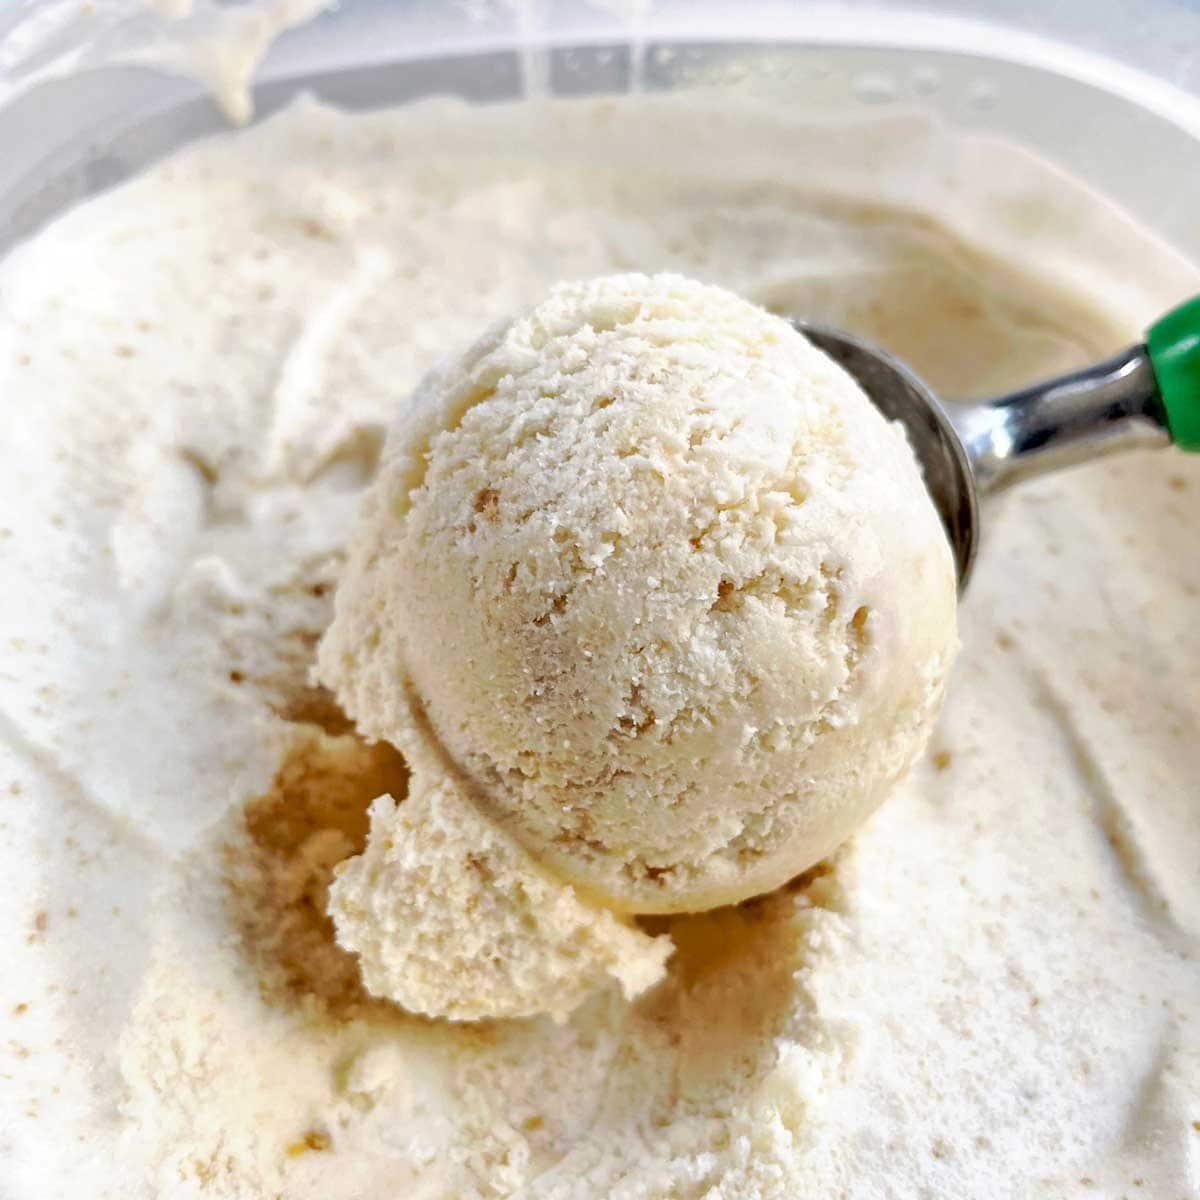 Butterscotch ice cream scoop.